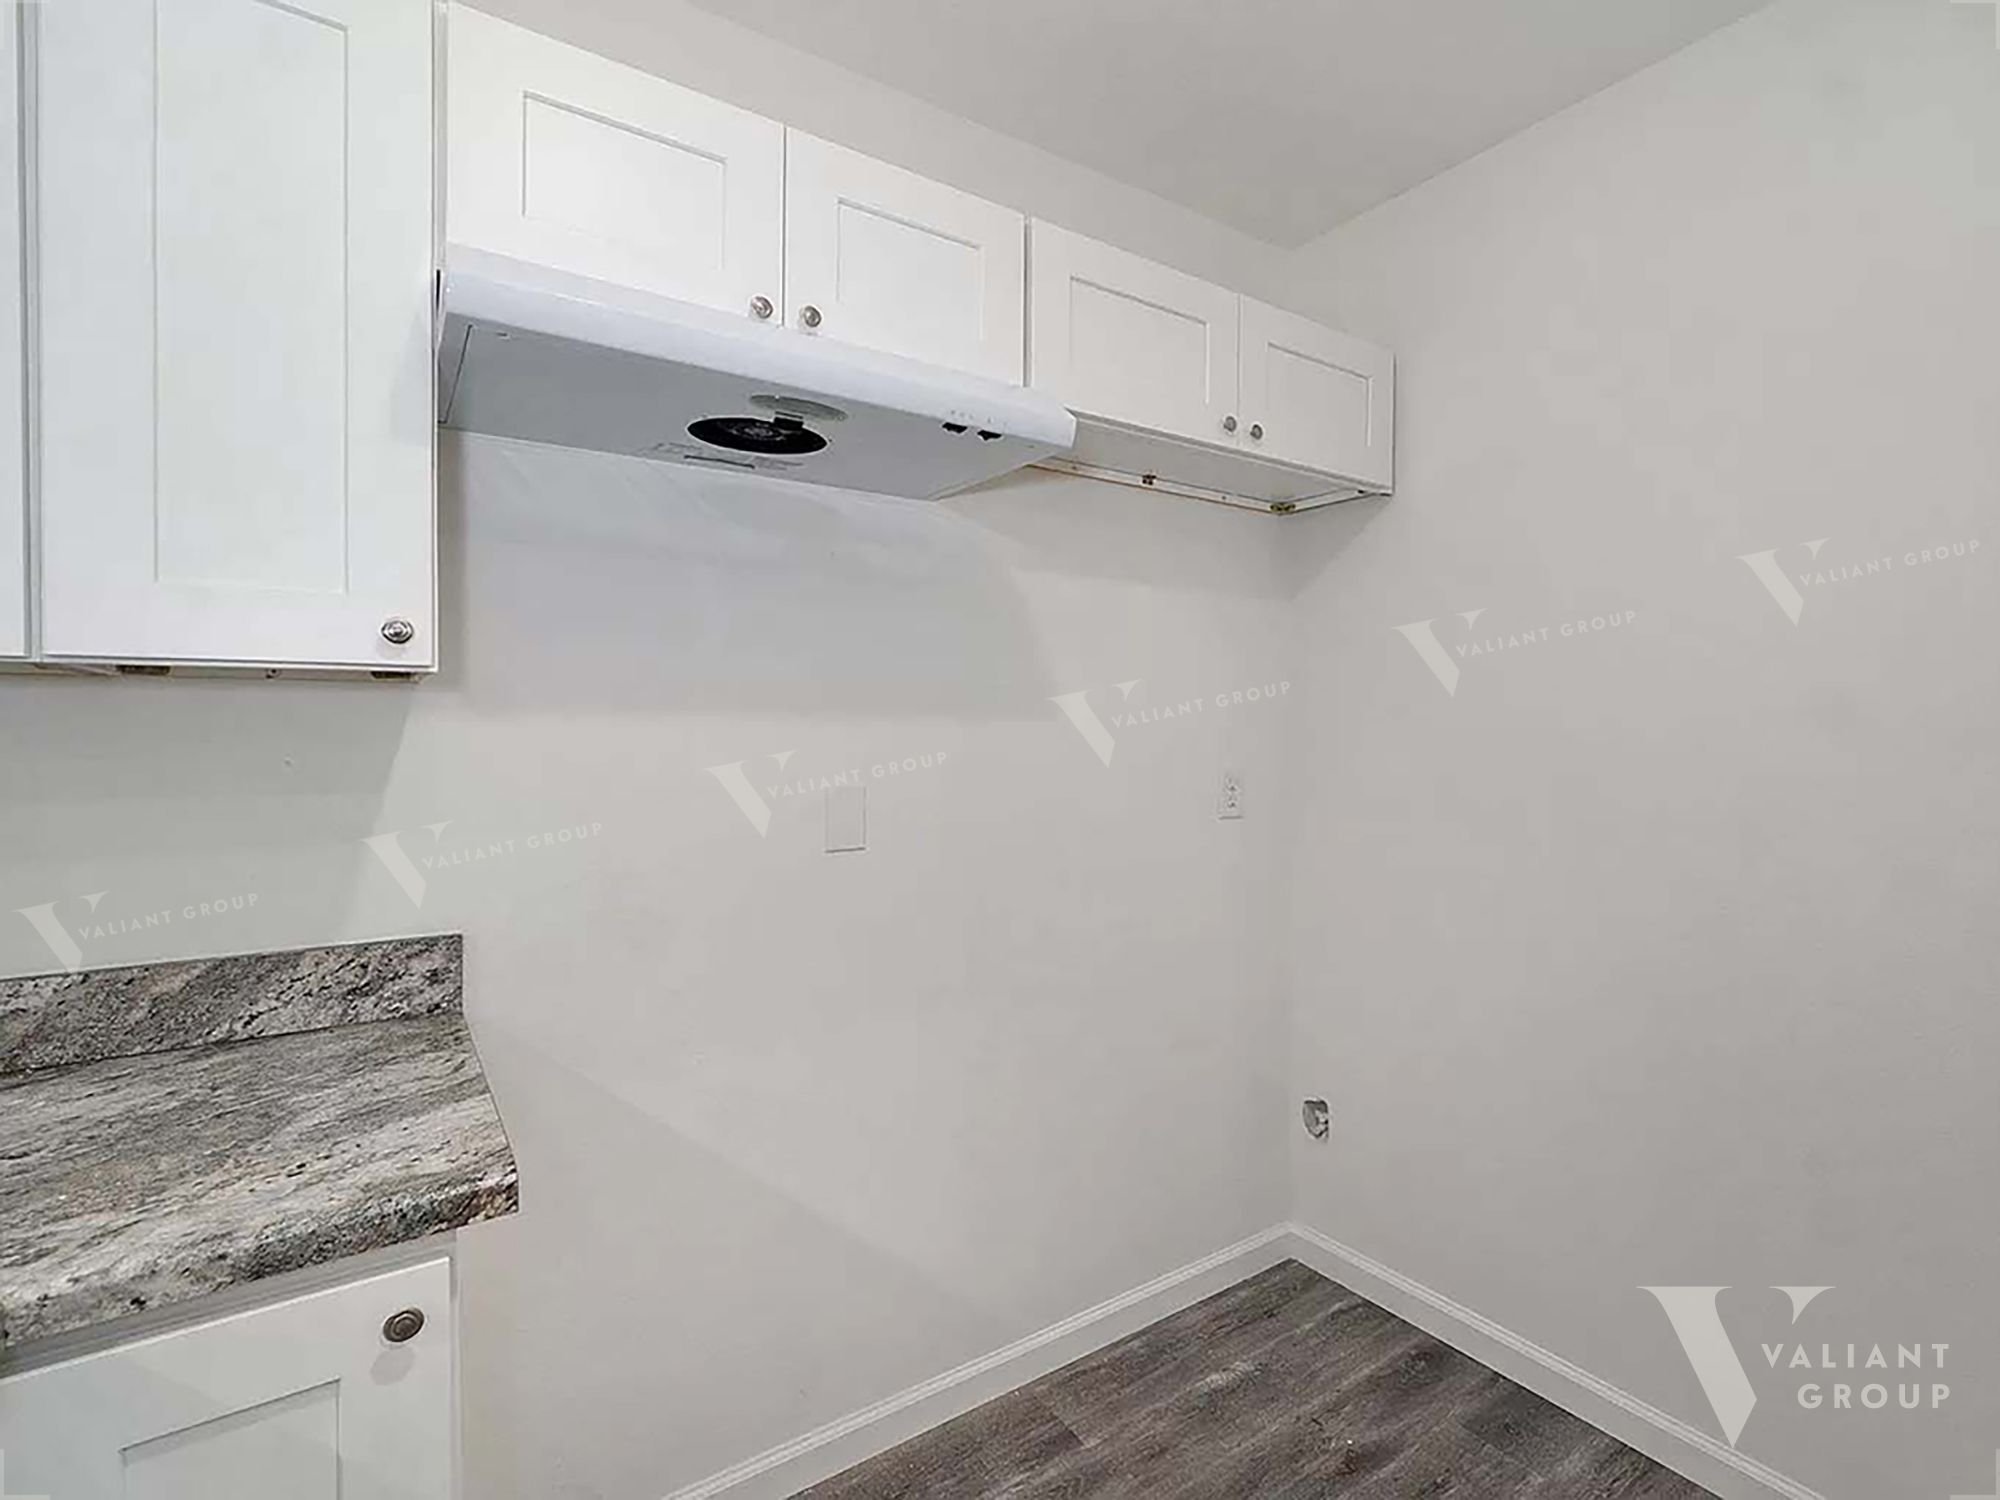 Rental Duplex Springfield MO 1610 W Scott Unit A - stove and fridge.jpg